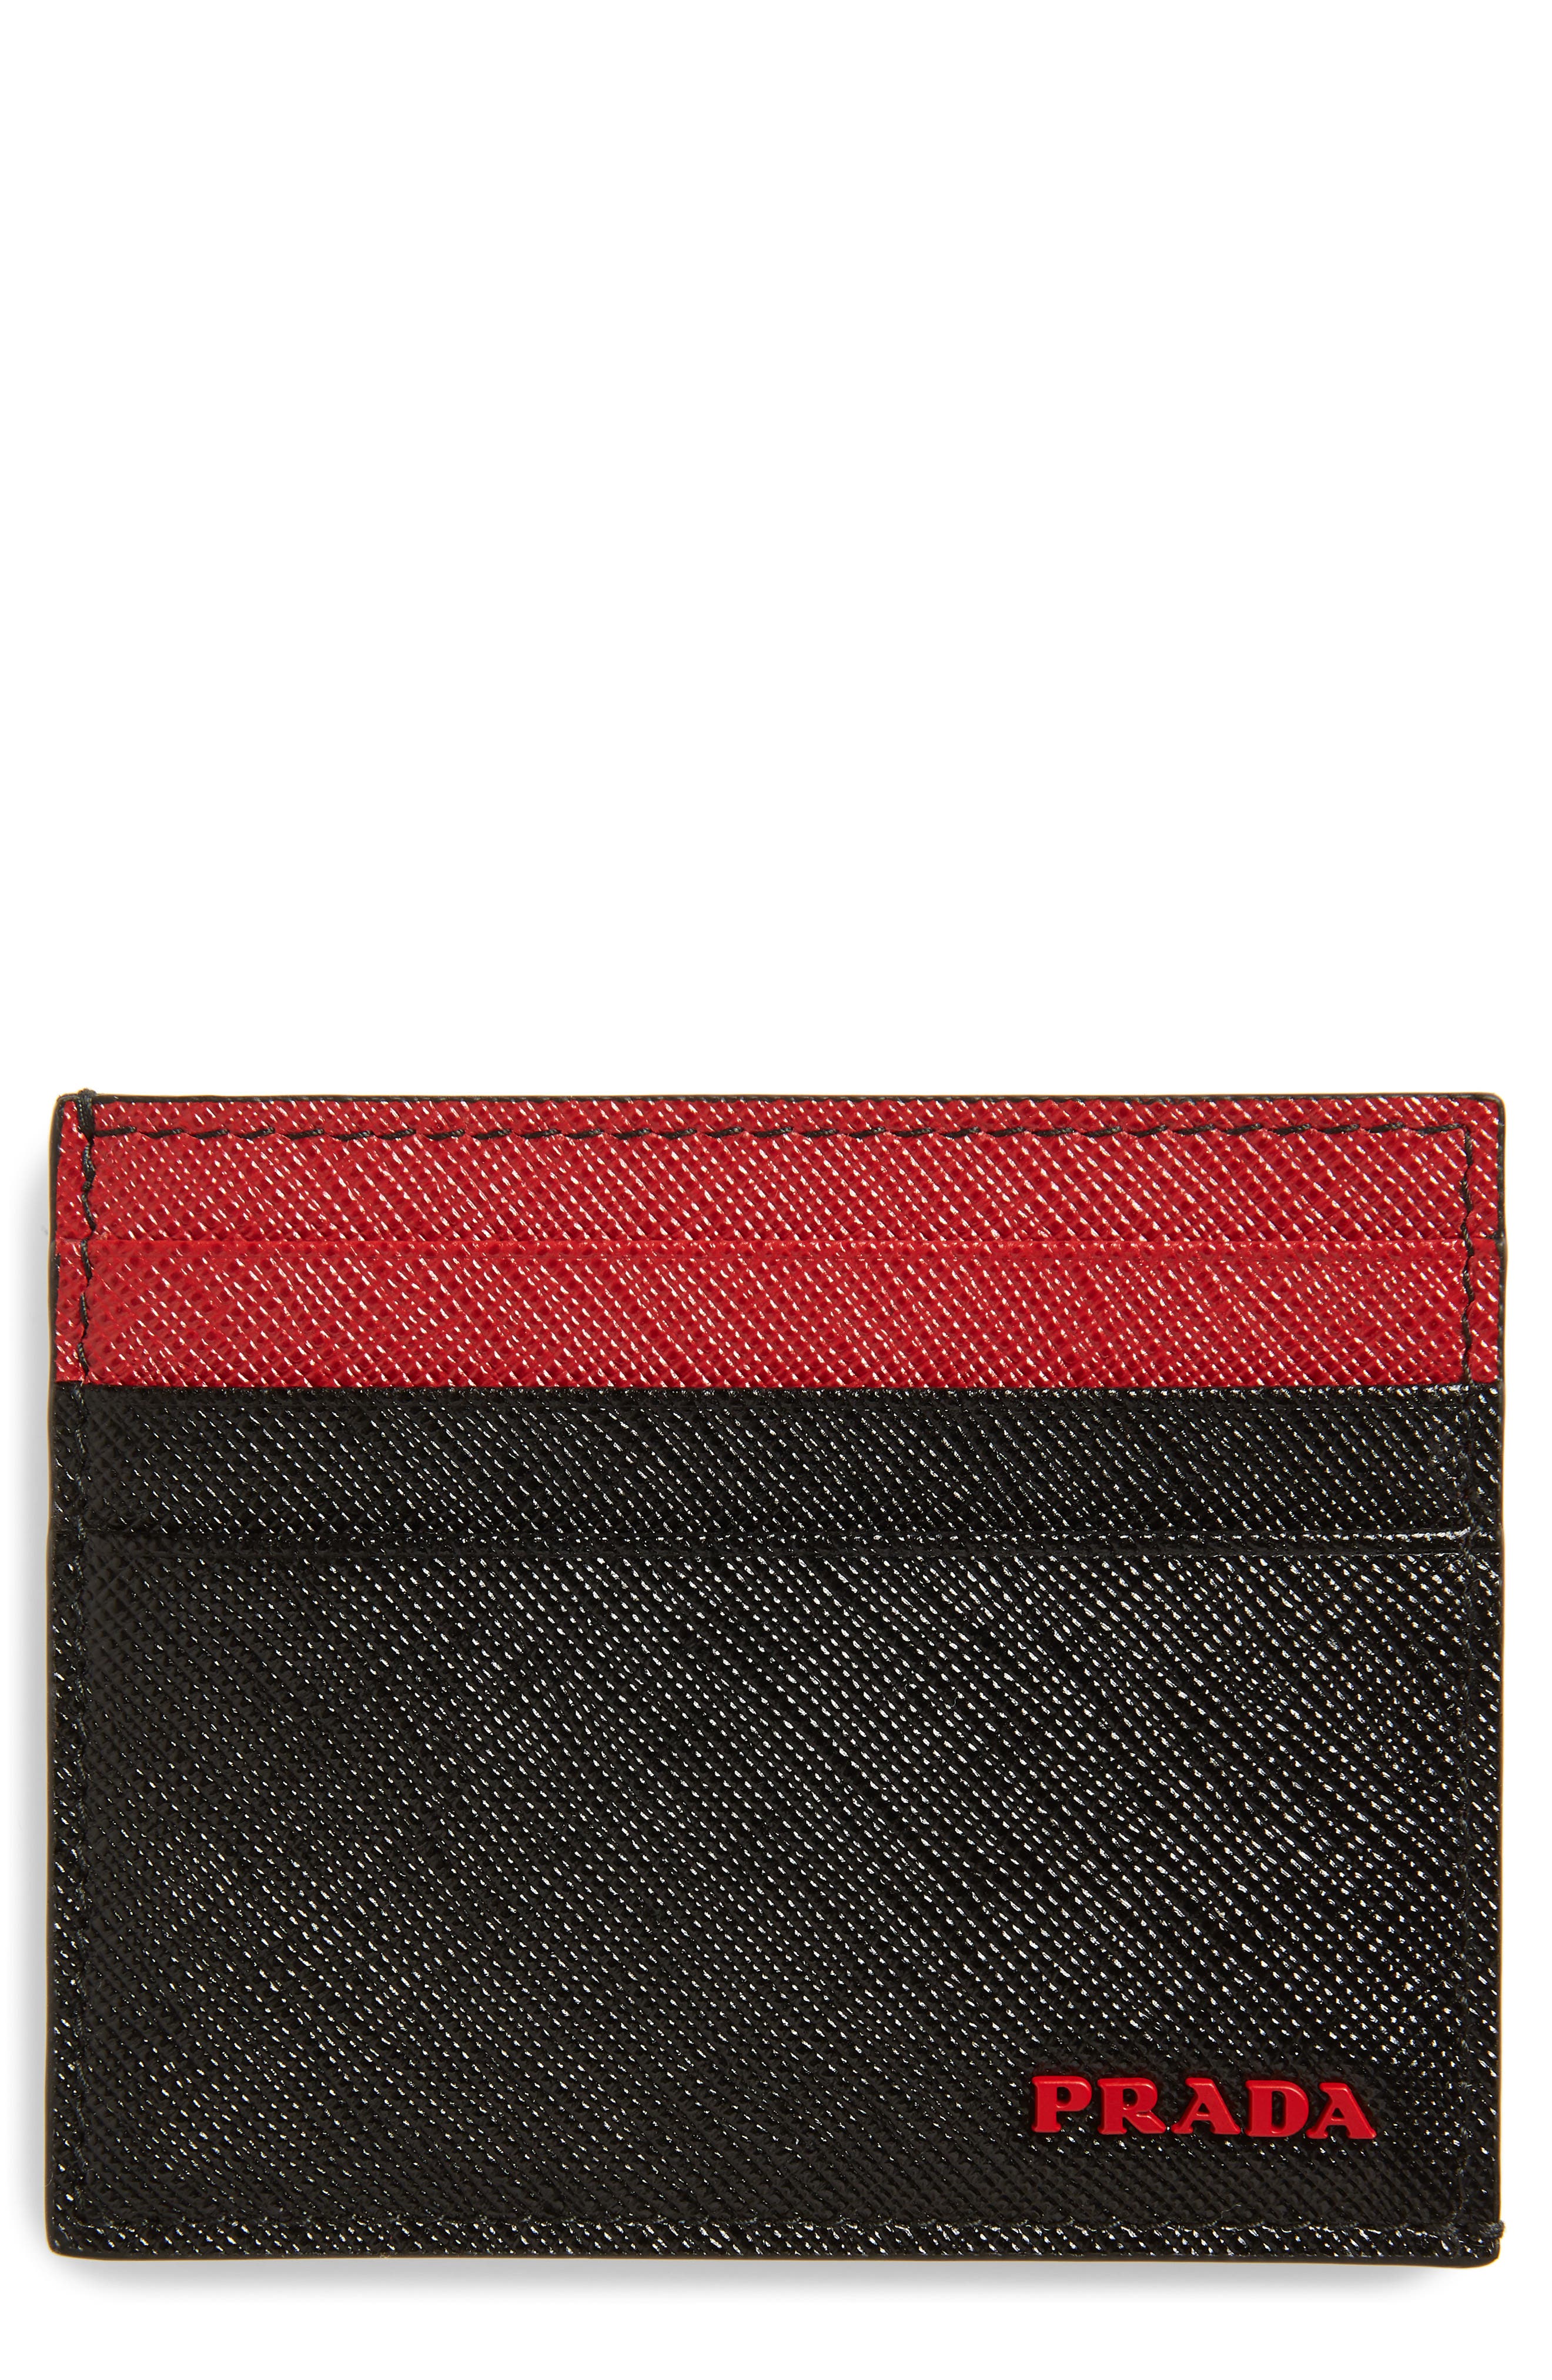 prada saffiano leather card case